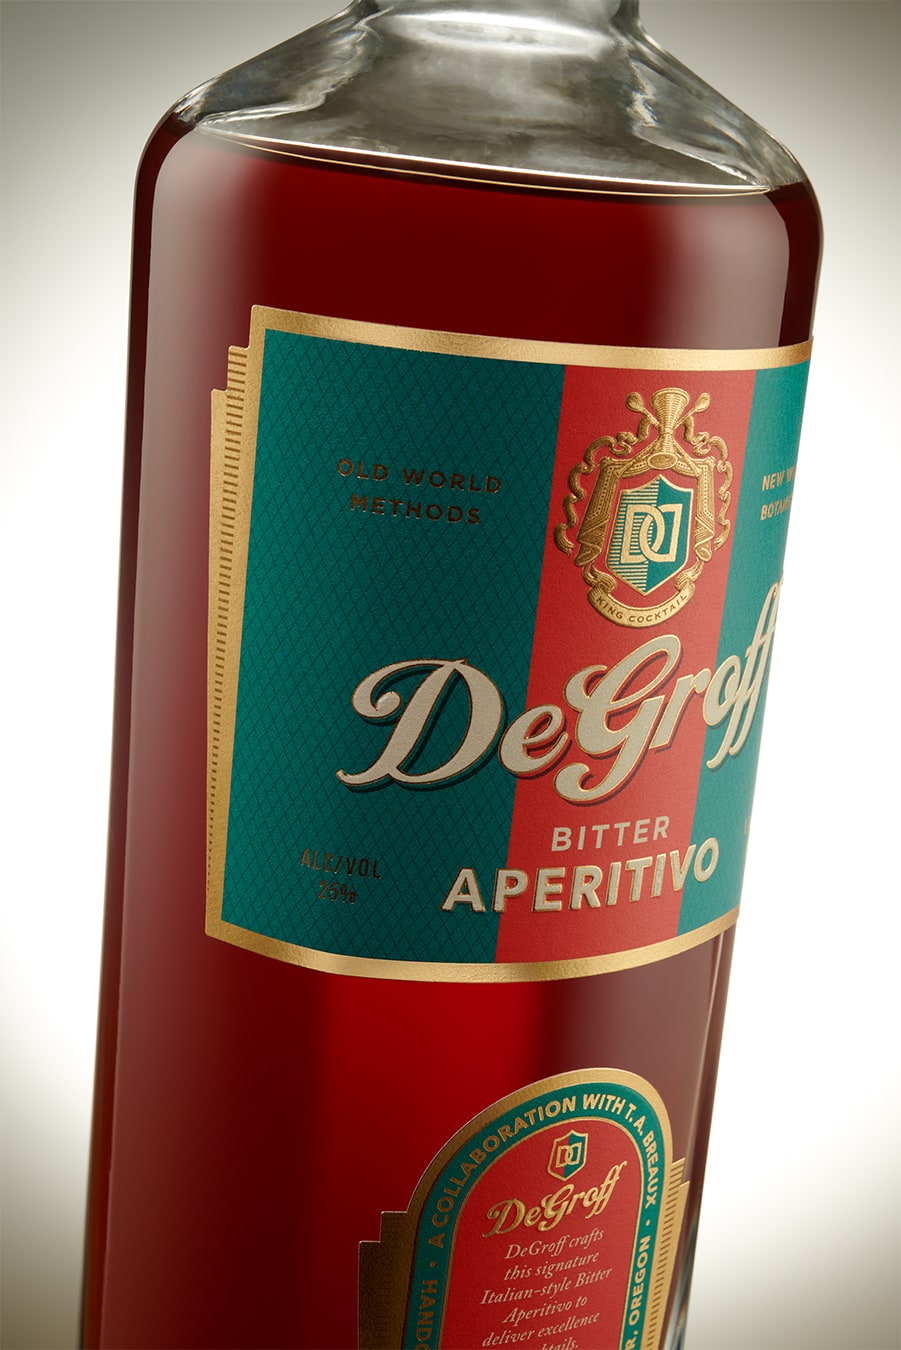 DeGroff Bitter Aperitivo label design closeup